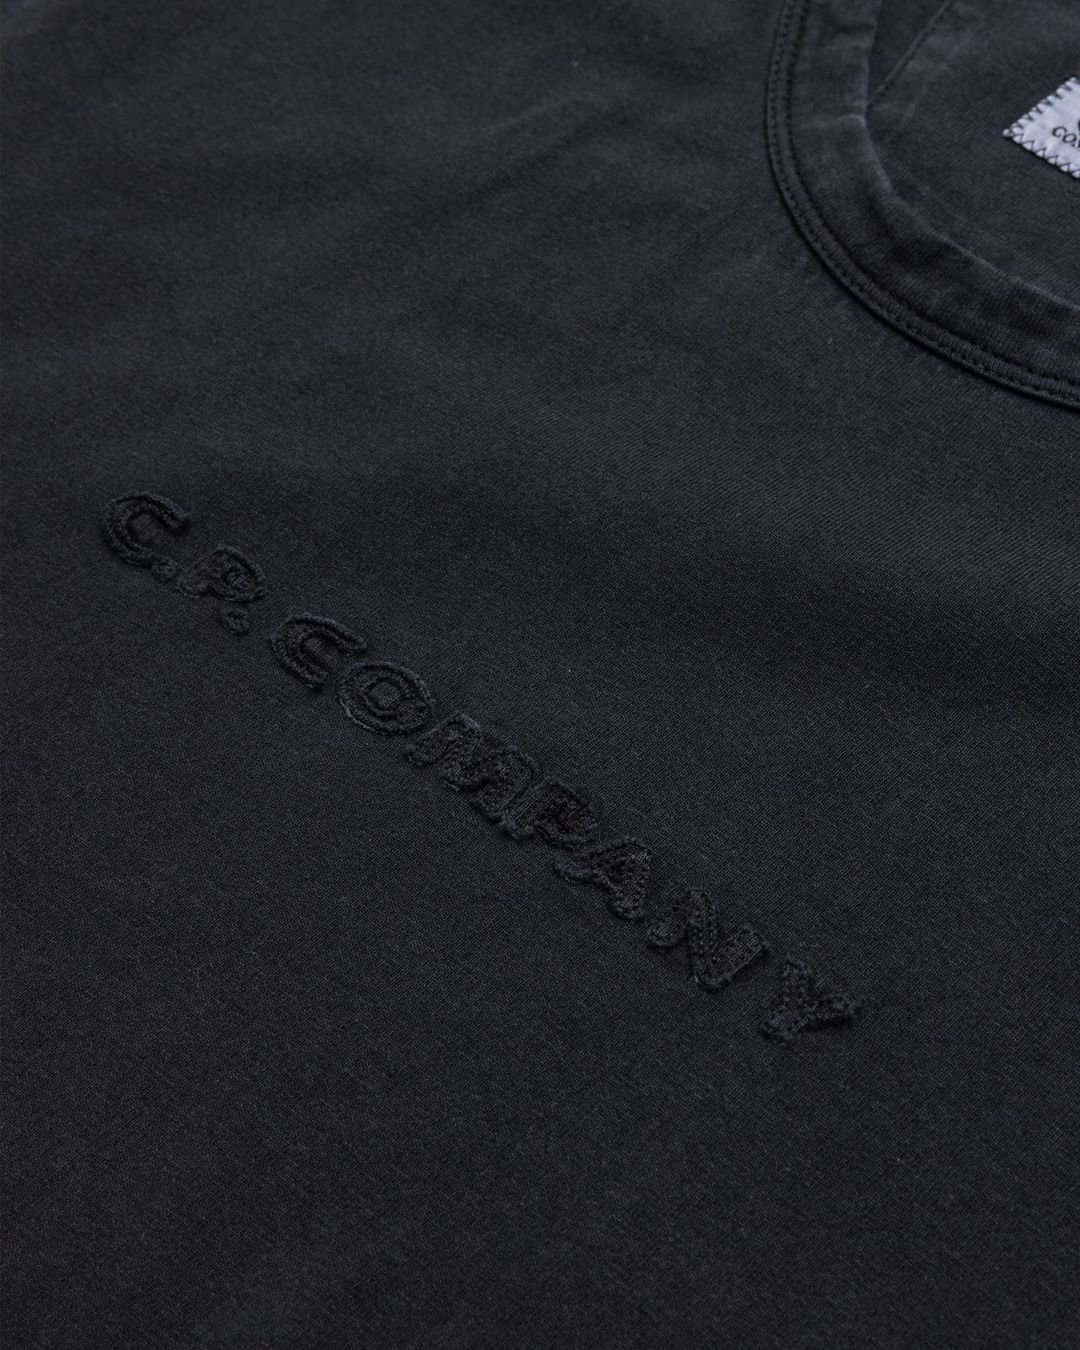 C.P. Company – 1020 Jersey Logo T-Shirt Black | Highsnobiety Shop